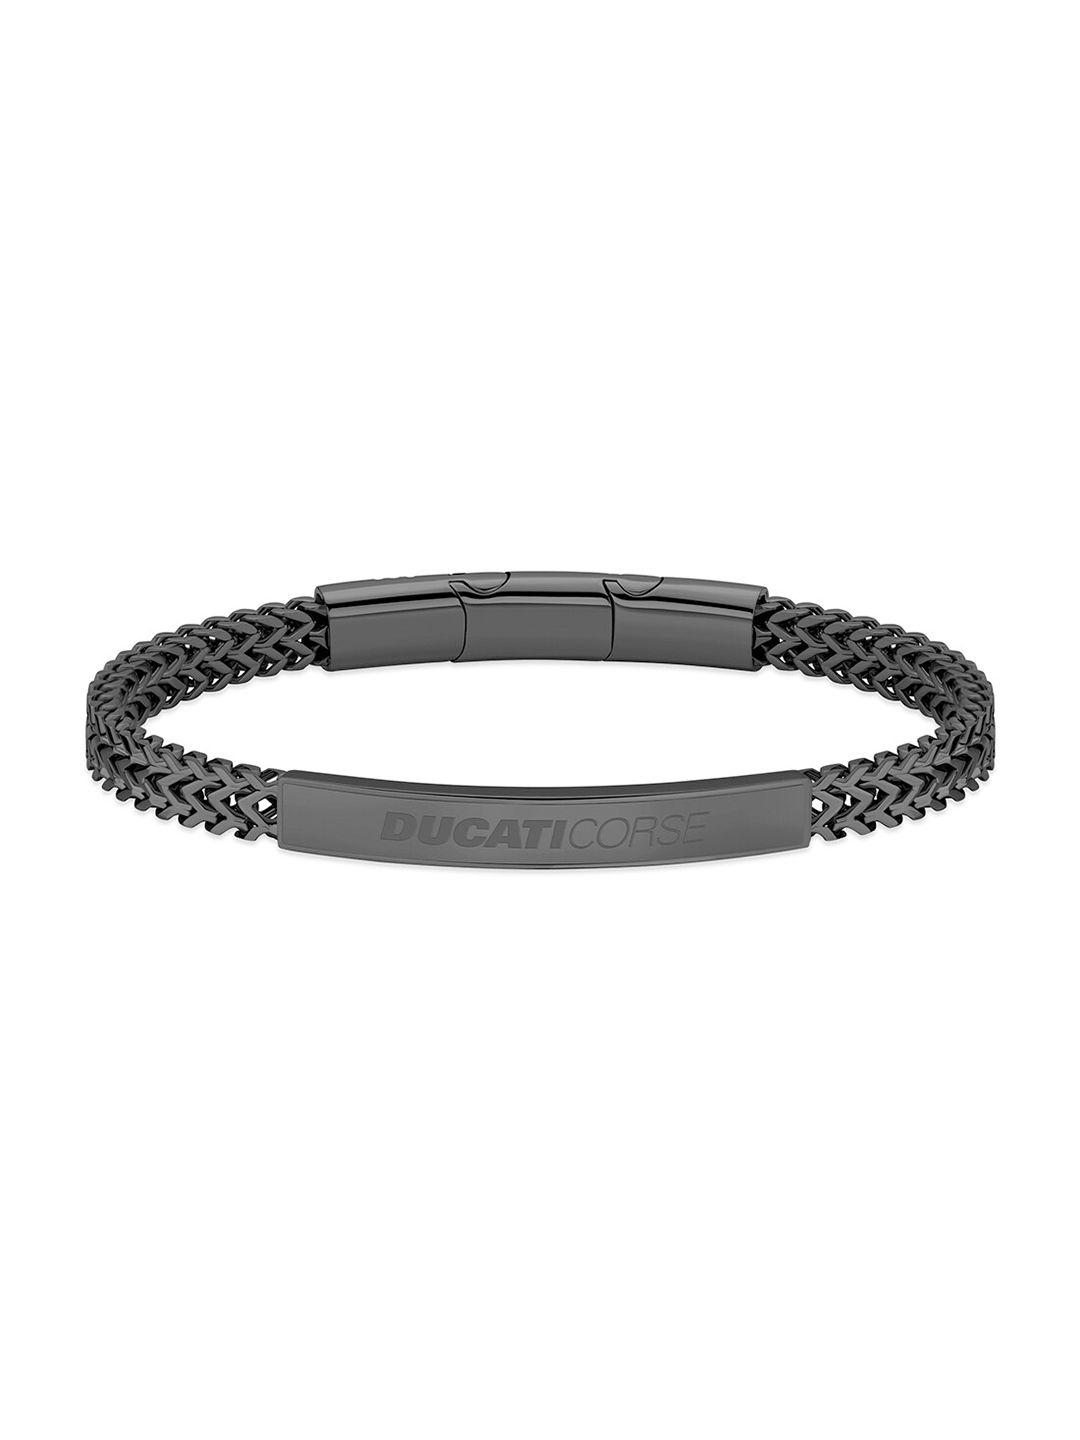 ducati corse men grey textured cuff bracelet